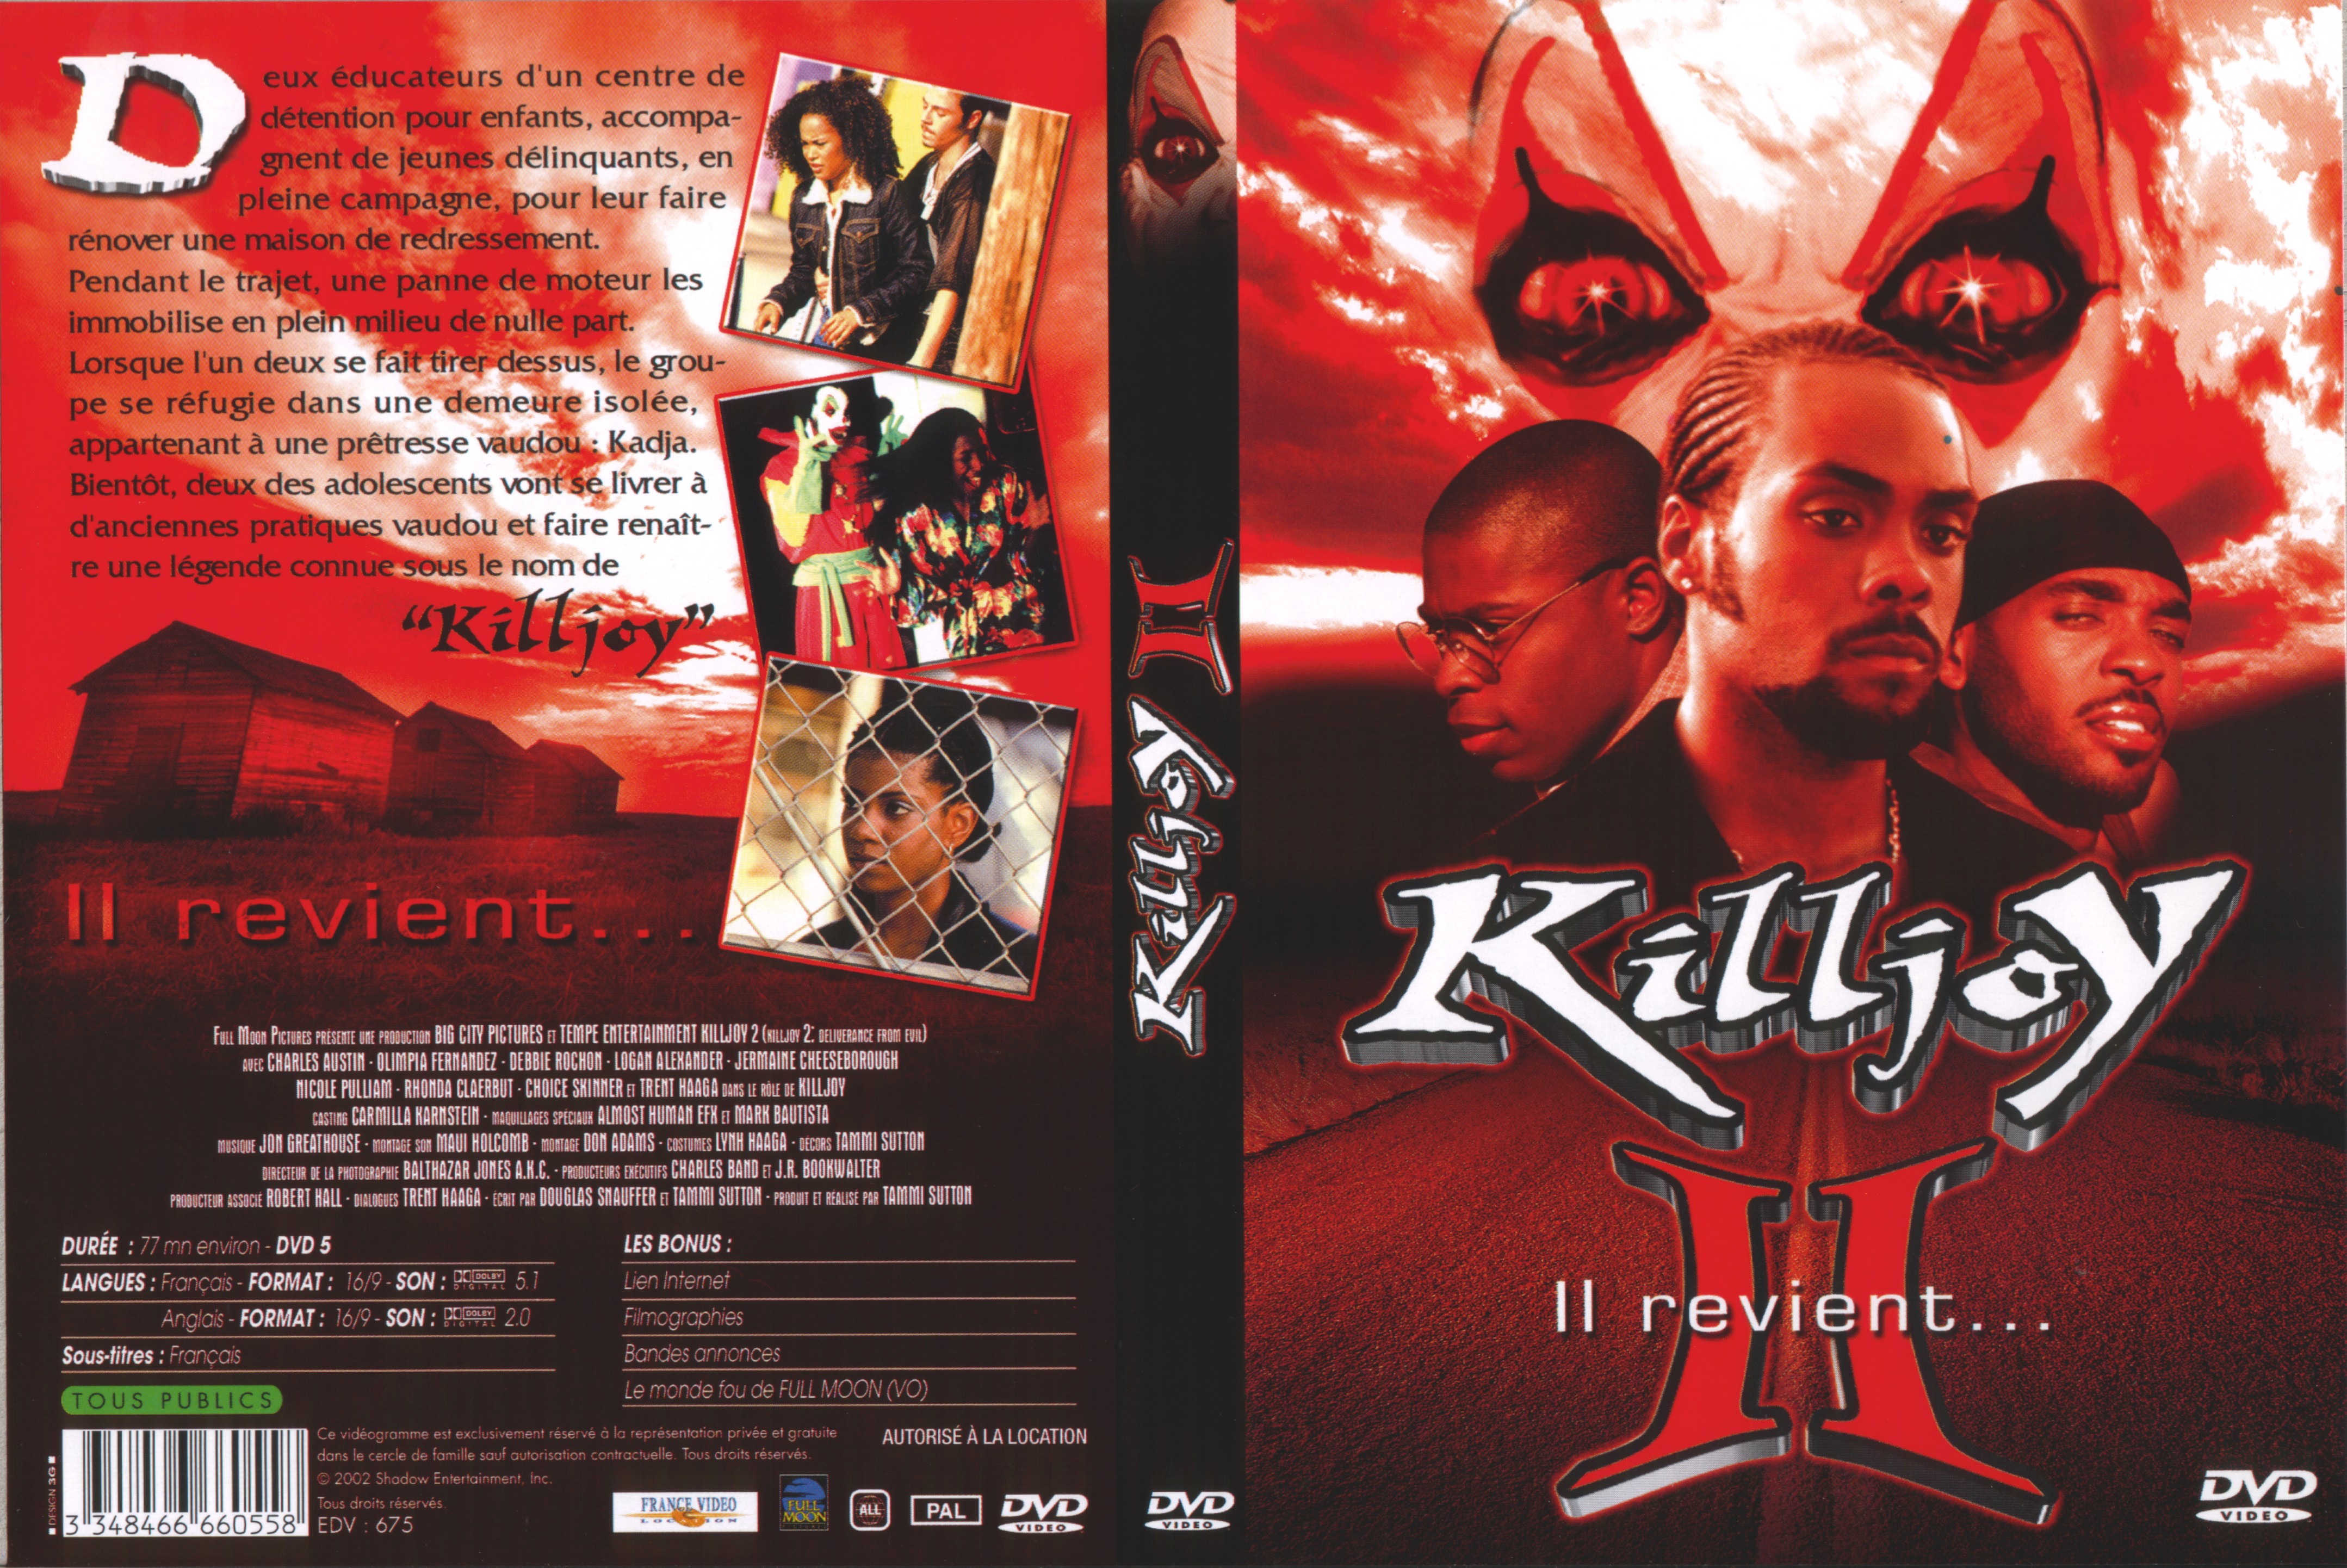 Jaquette DVD Killjoy 2